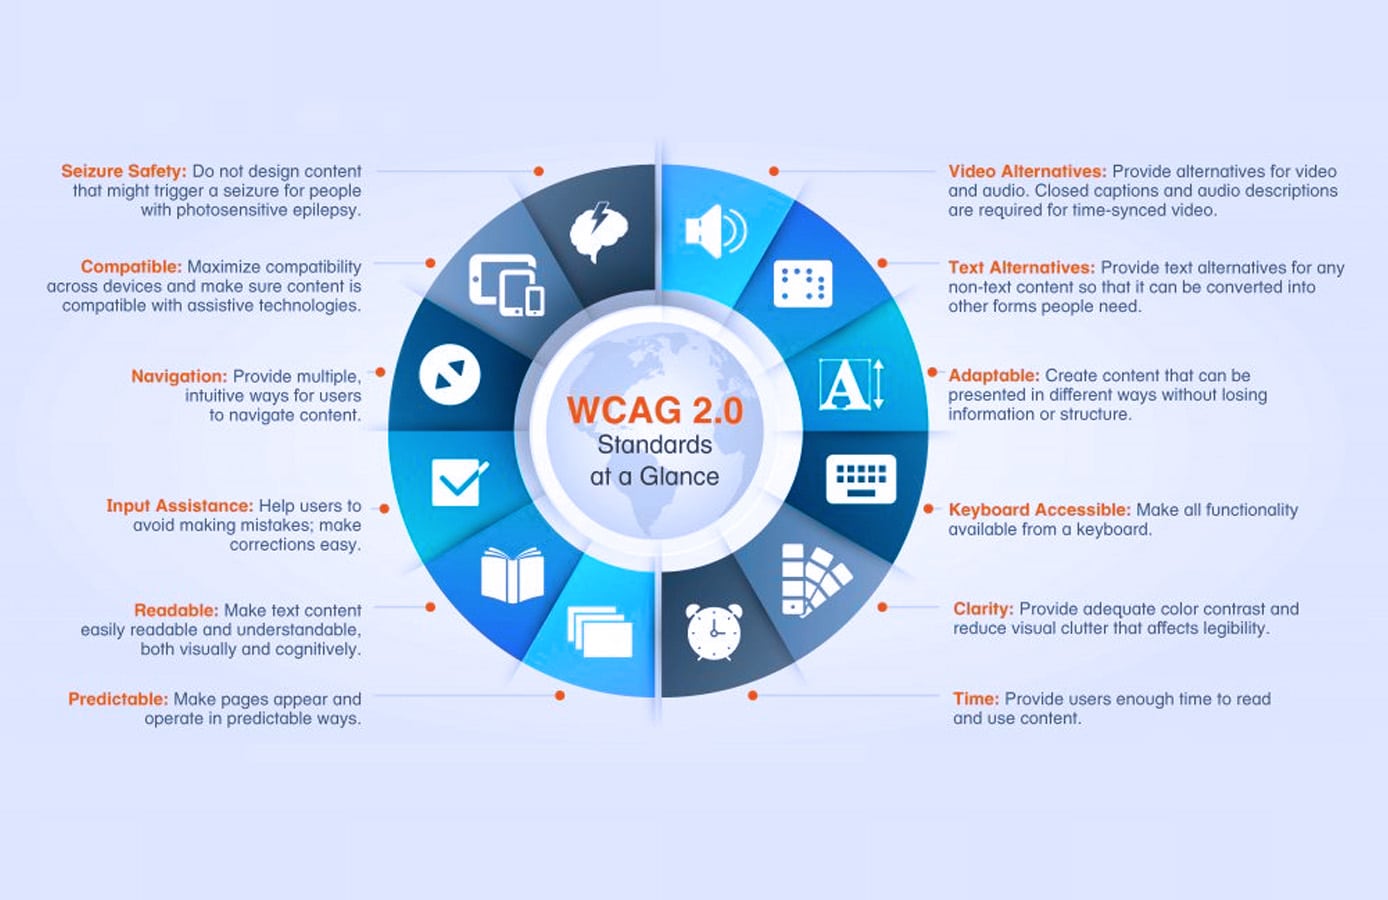 WCAG 2.0 guidelines